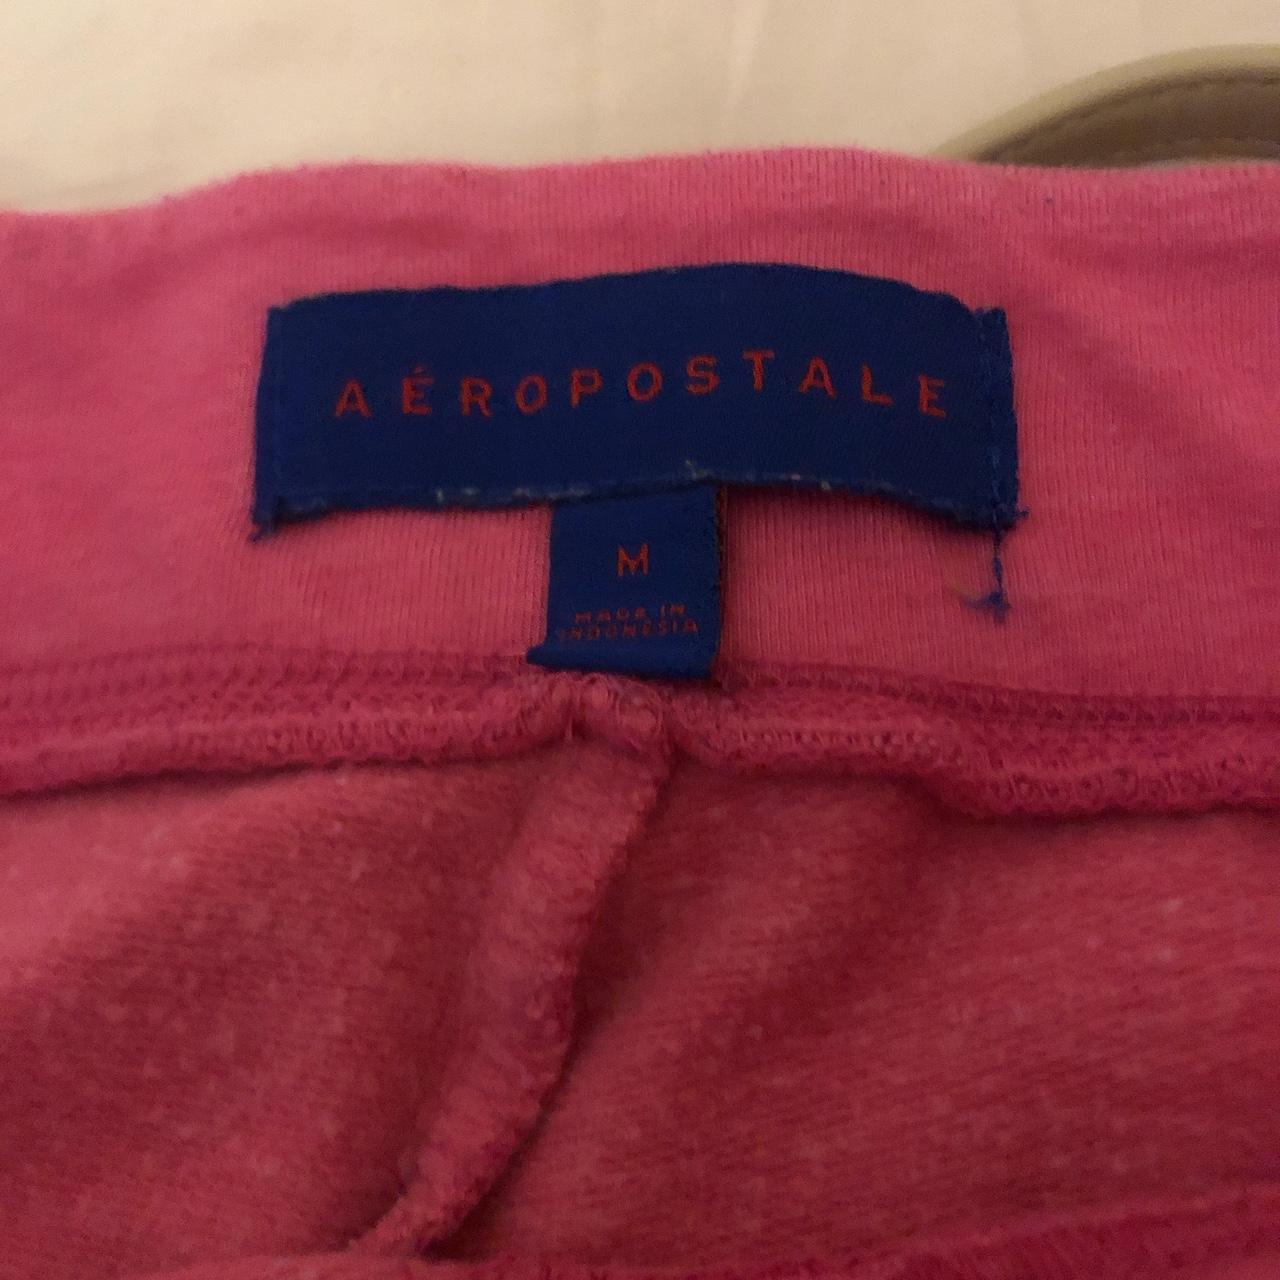 Aeropostale hot pink flare sweatpants!, In great